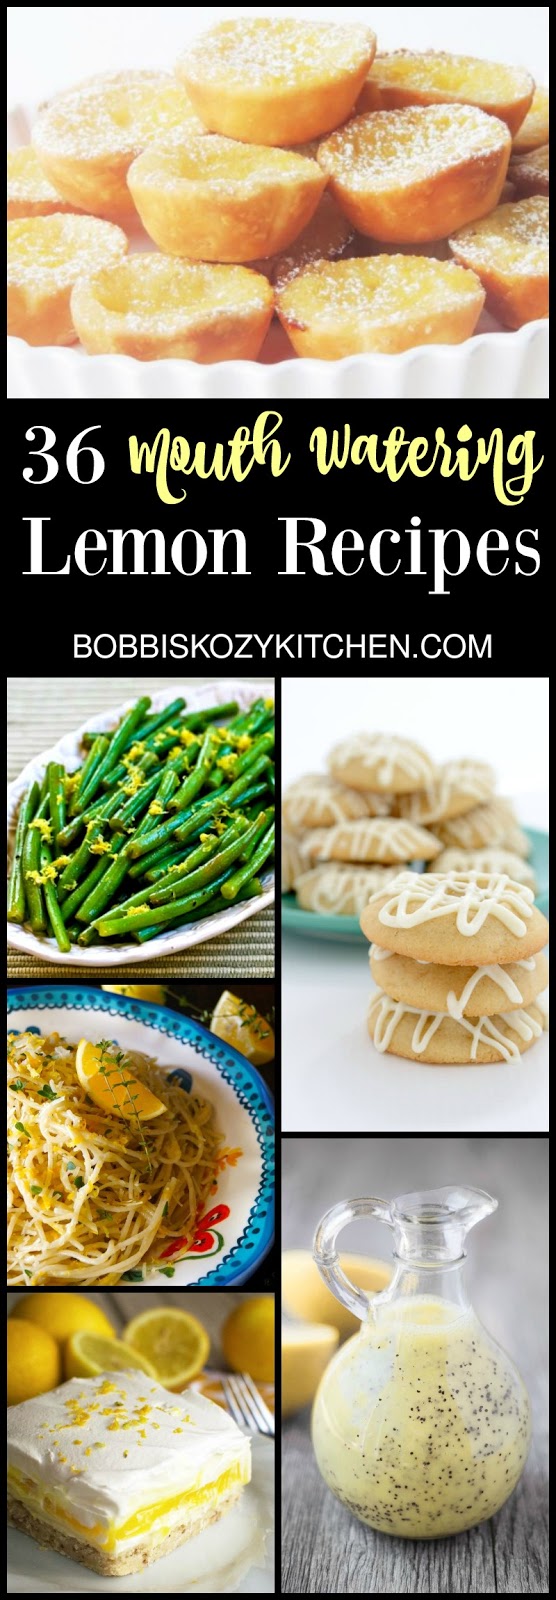 36 Mouth Watering Lemon Recipes from www.bobbiskozykitchen.com